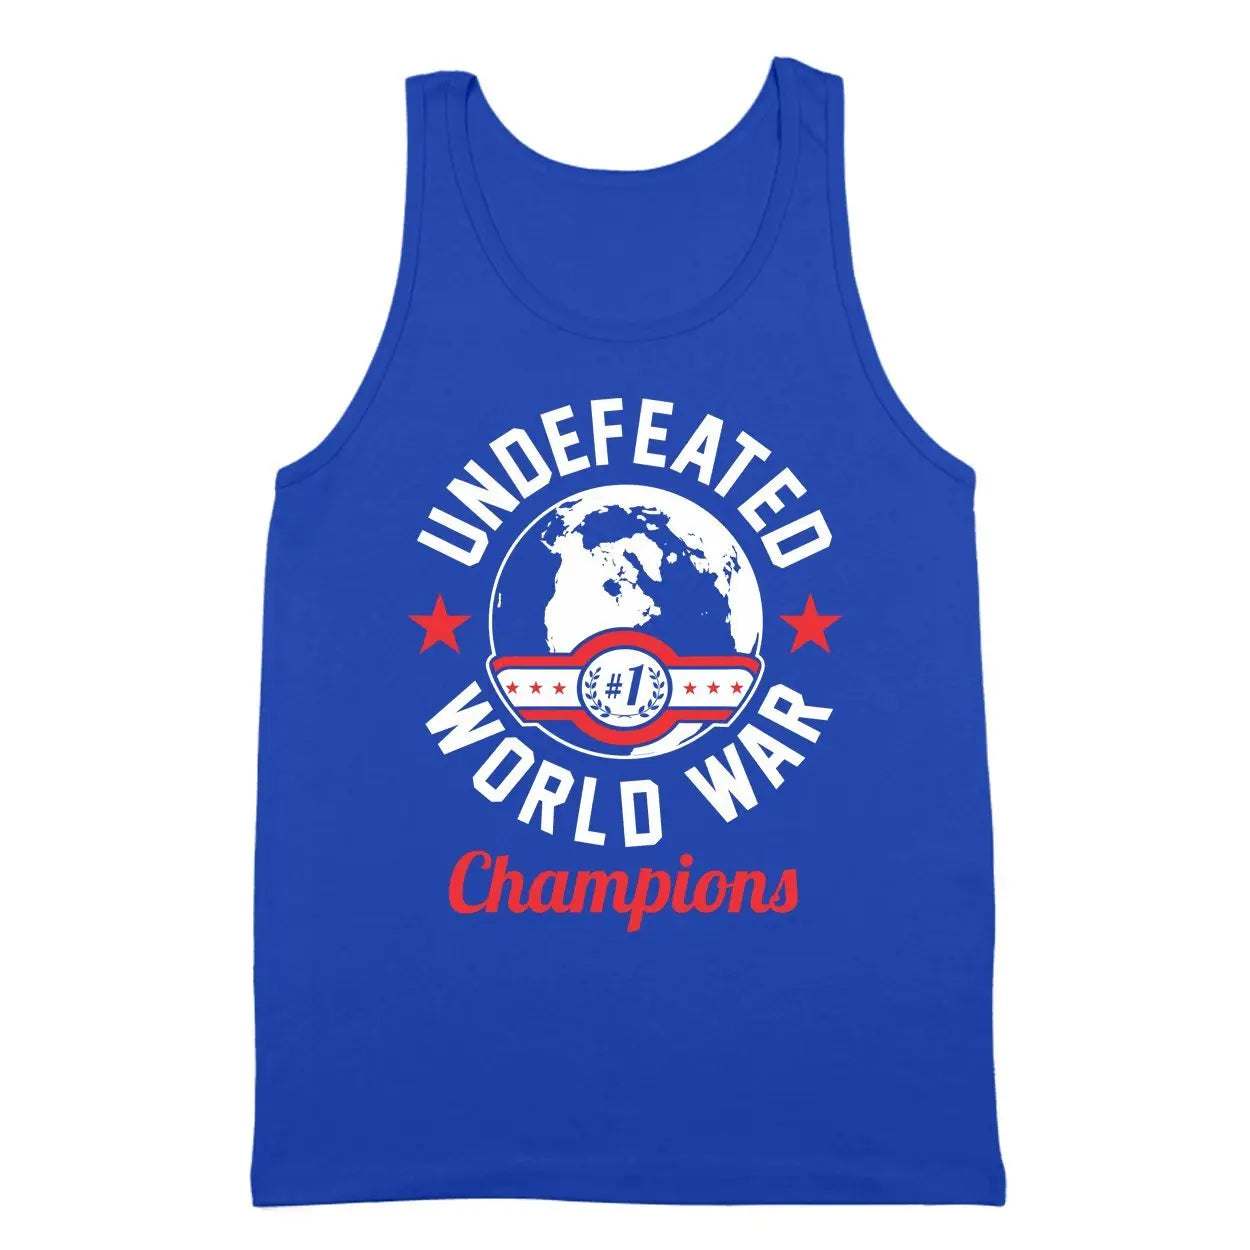 Undefeated World War Champions Tshirt - Donkey Tees